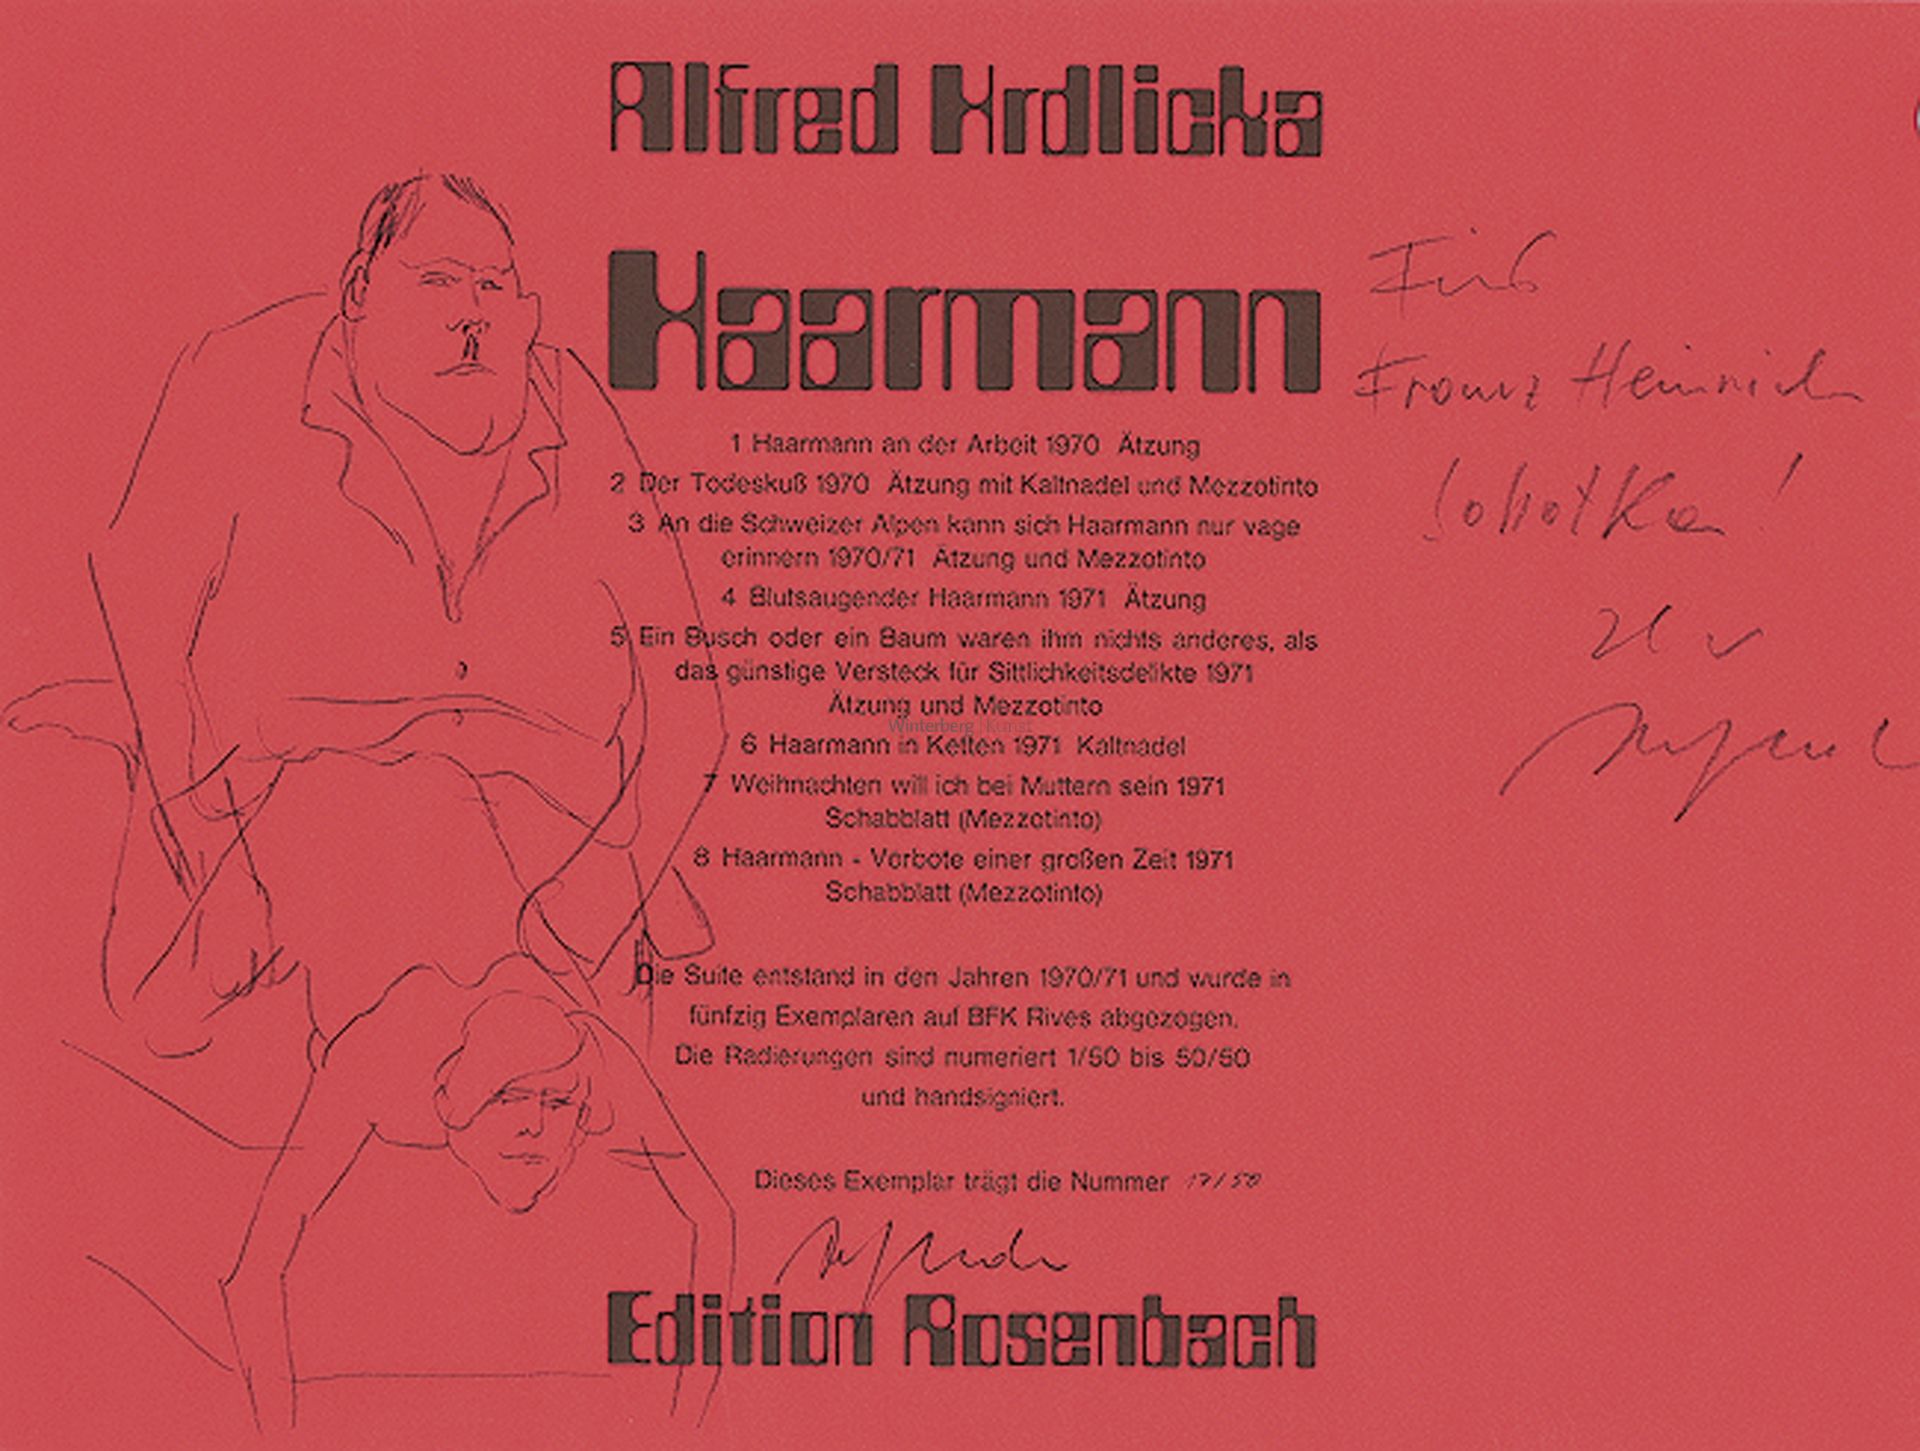 ALFRED HRDLICKA: Alfred Hrdlicka. Haarmann (II).